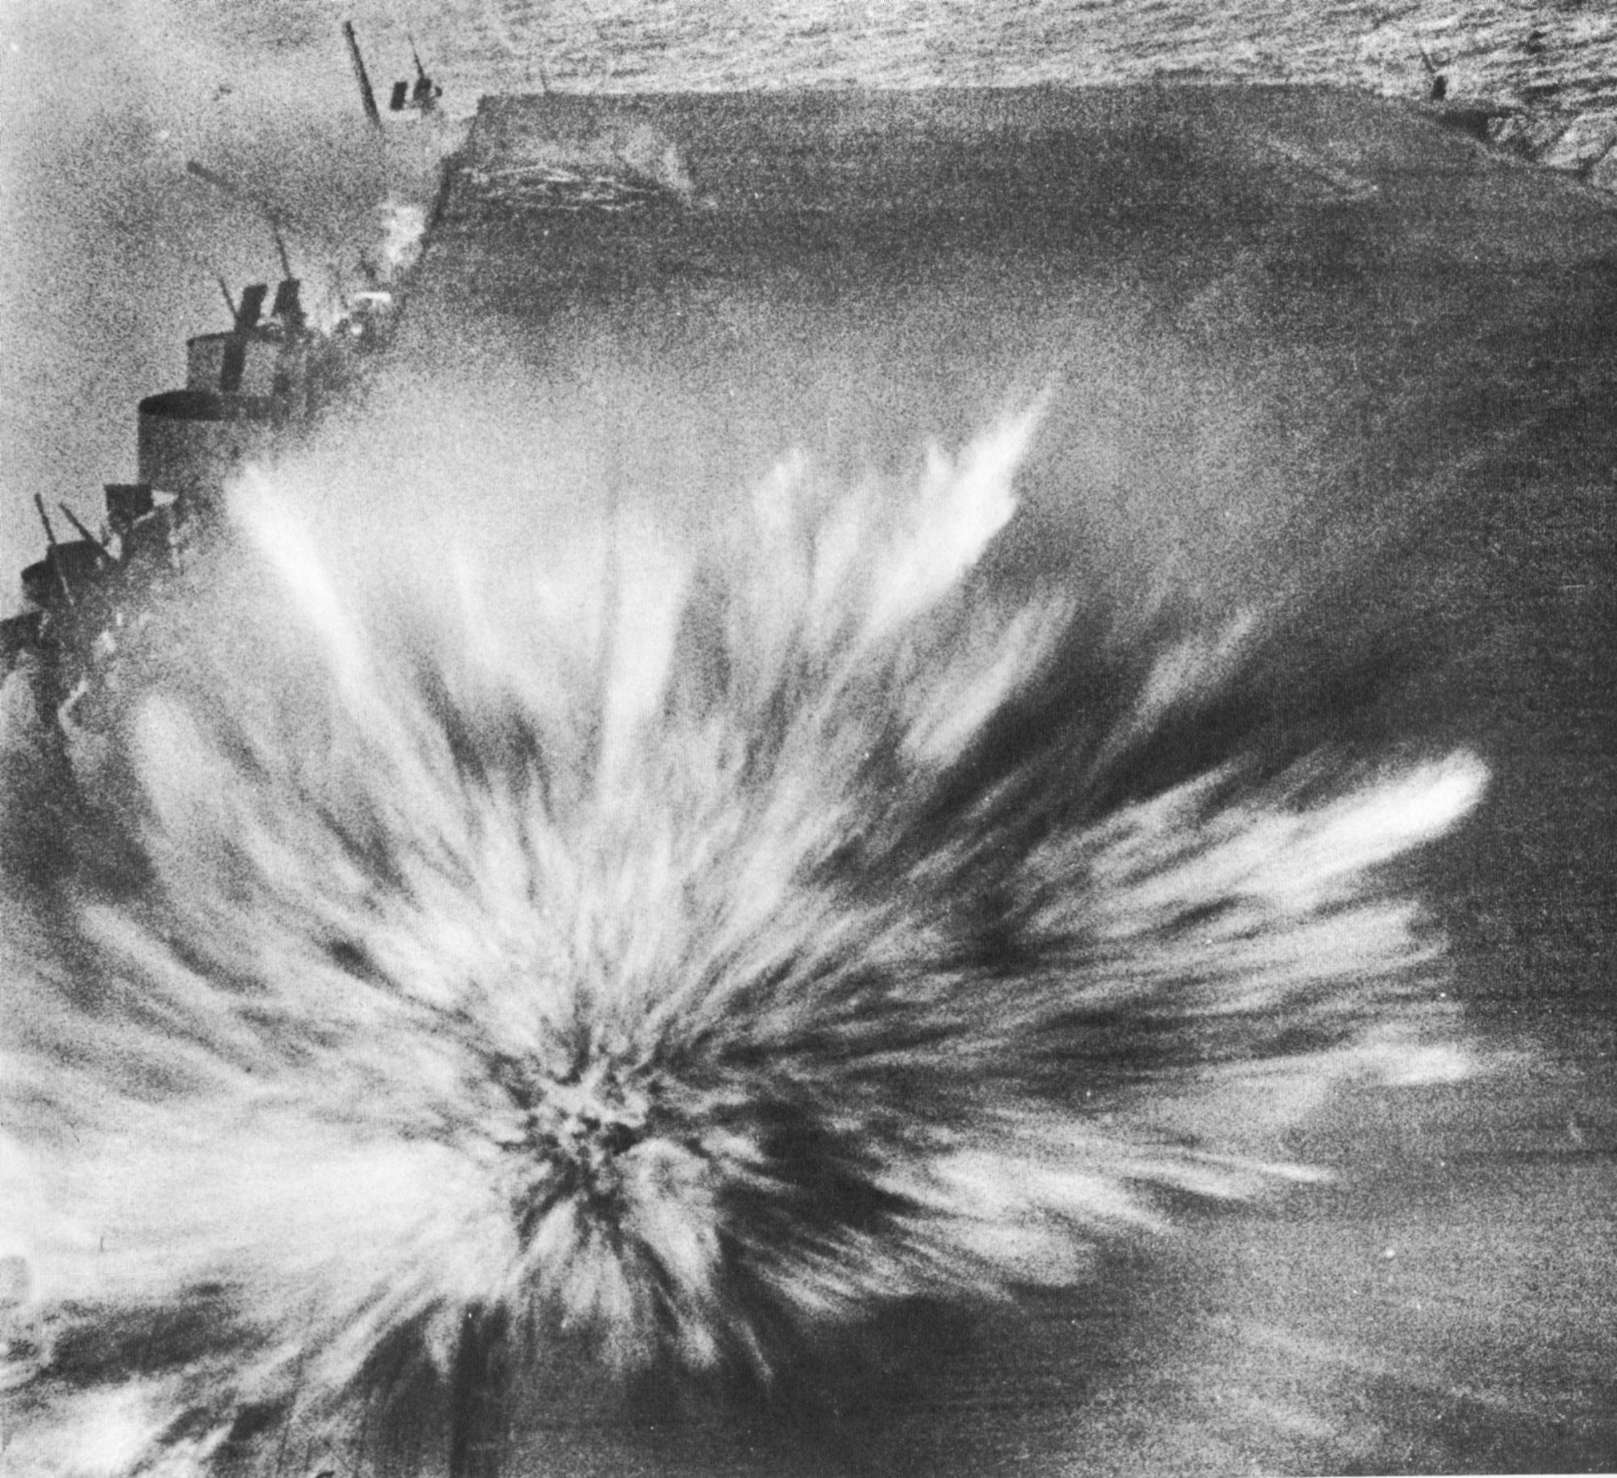 japanese bomb hits deck of uss enterprise, 1942